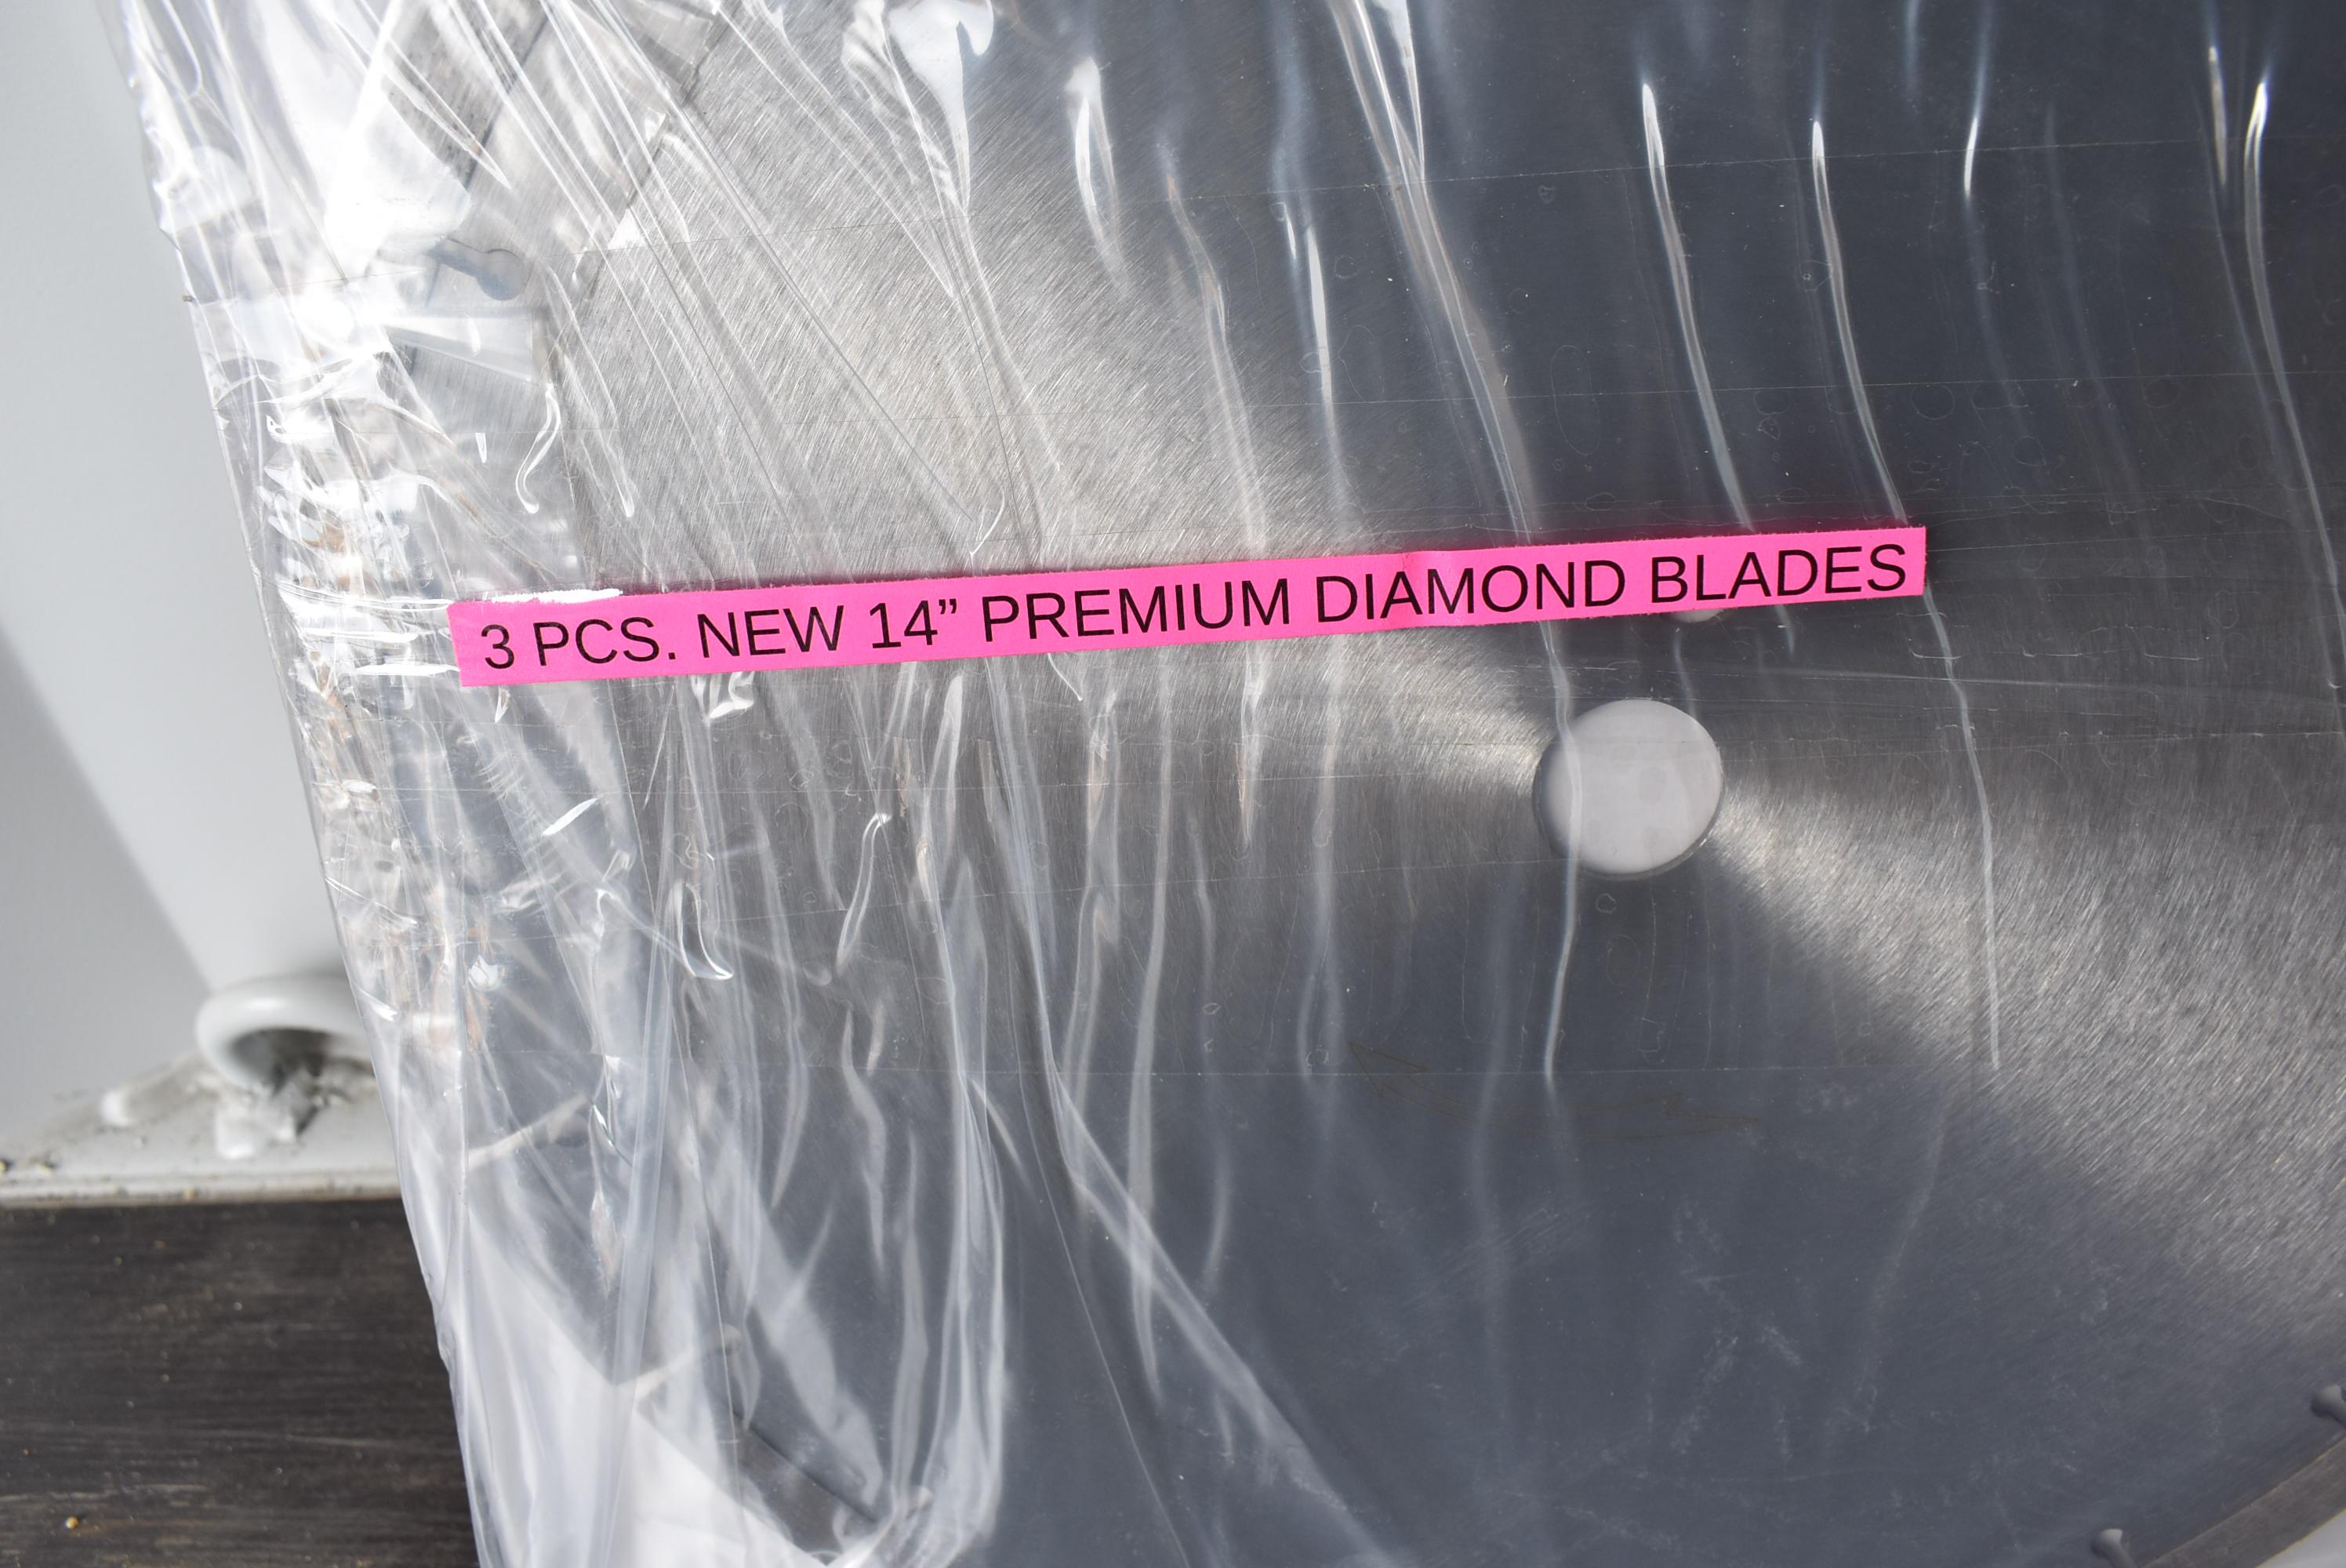 New 14 in premium diamond blades, 3 pieces